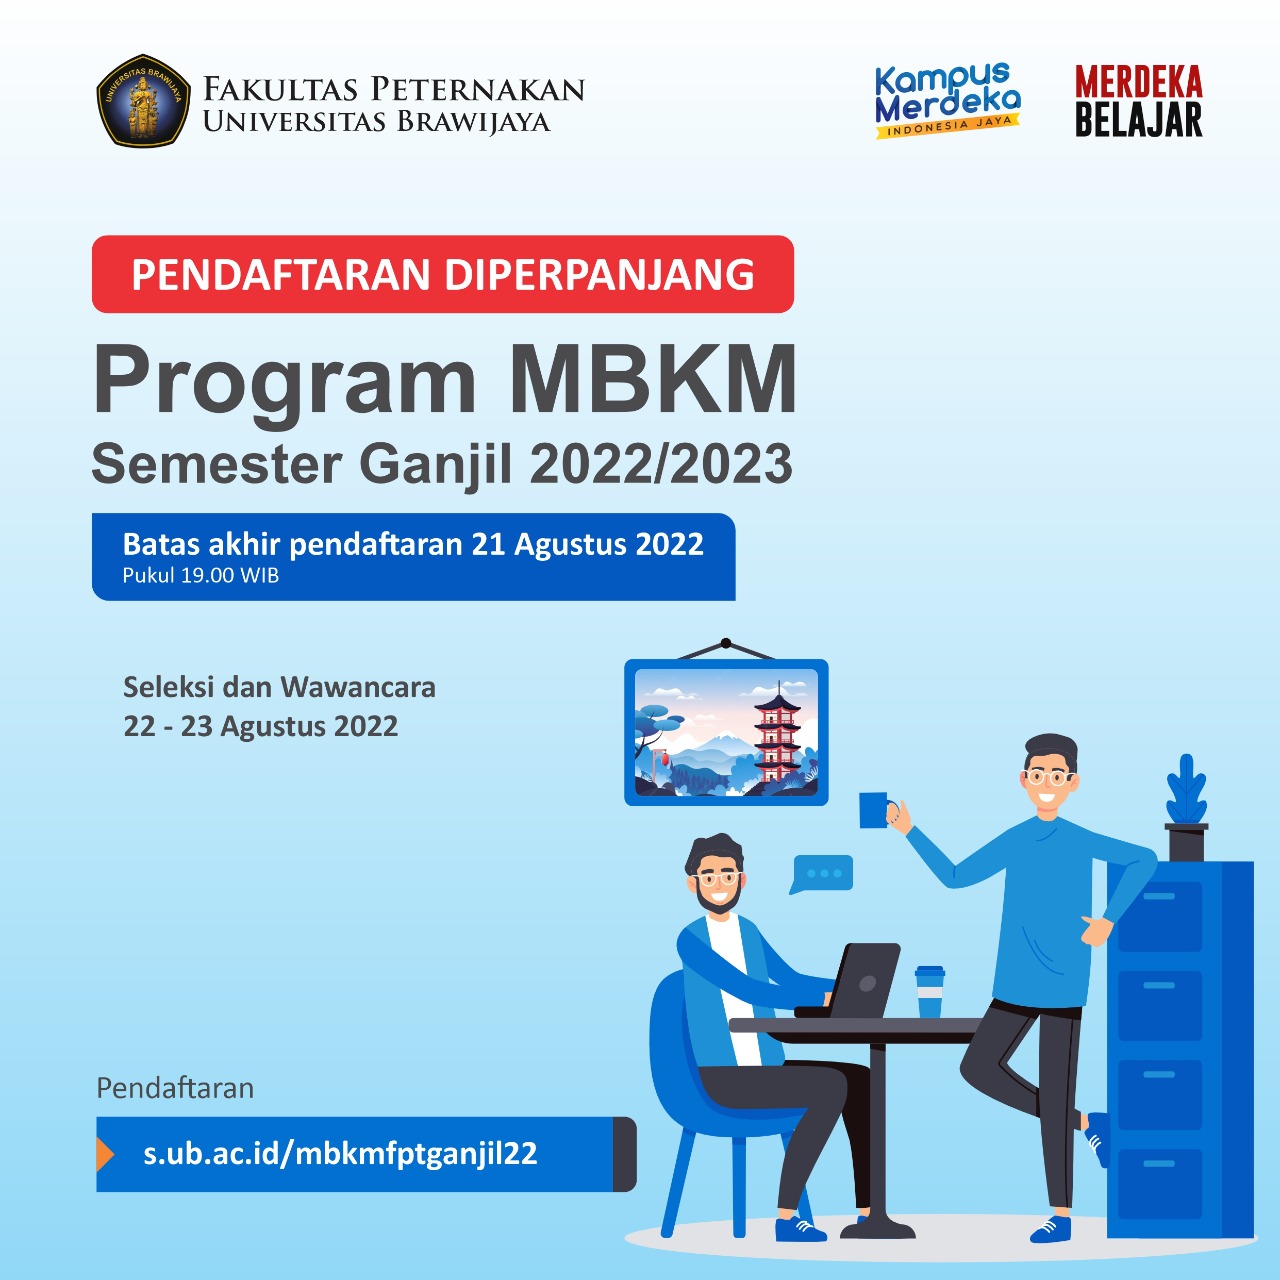 Extension of Registration for the MBKM Program for Odd Semester Year. 2022/2023